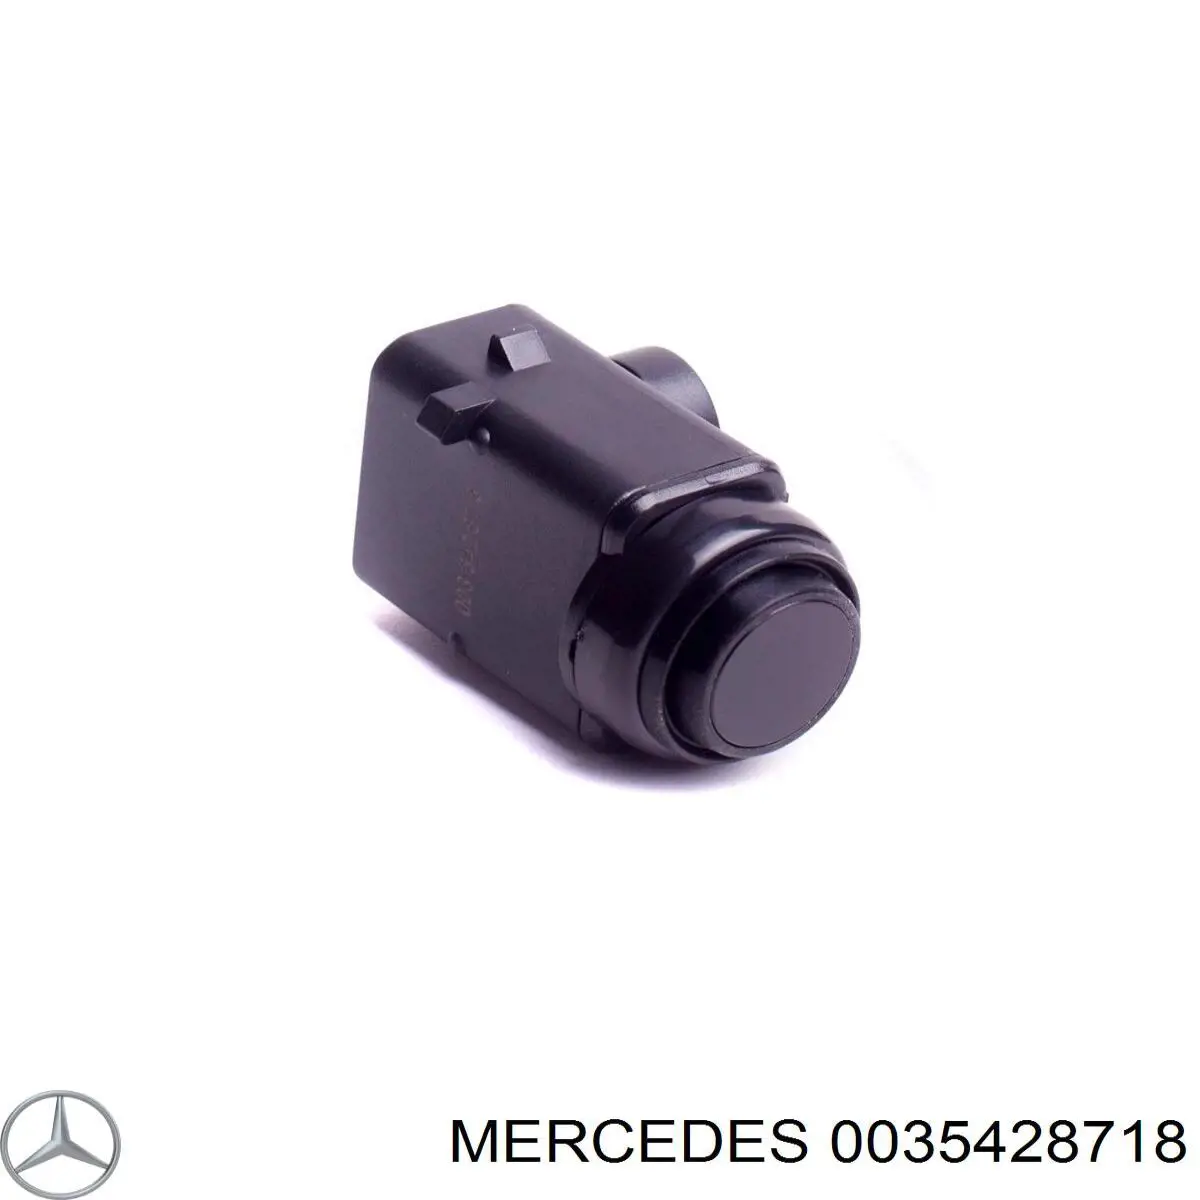 0035428718 Mercedes датчик сигнализации парковки (парктроник передний)